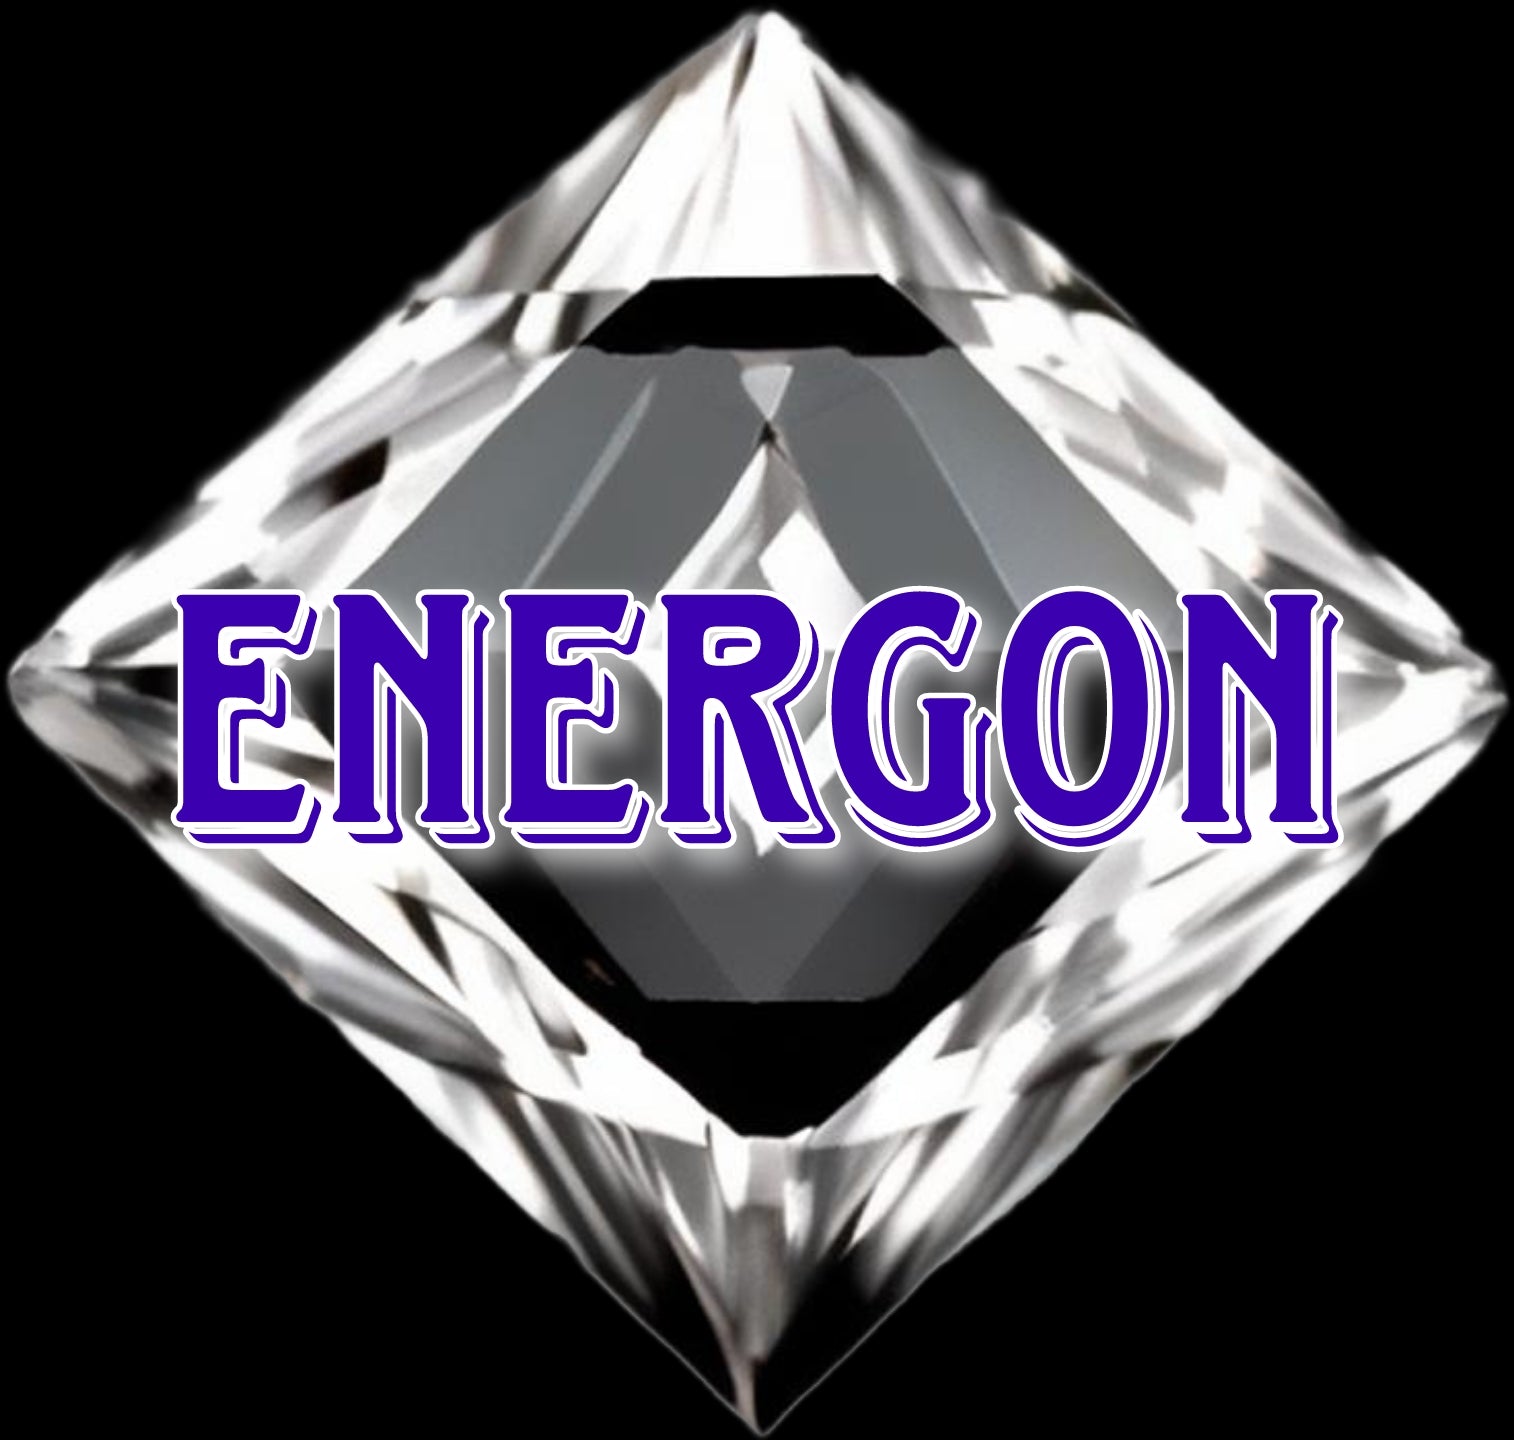 The Energon Store